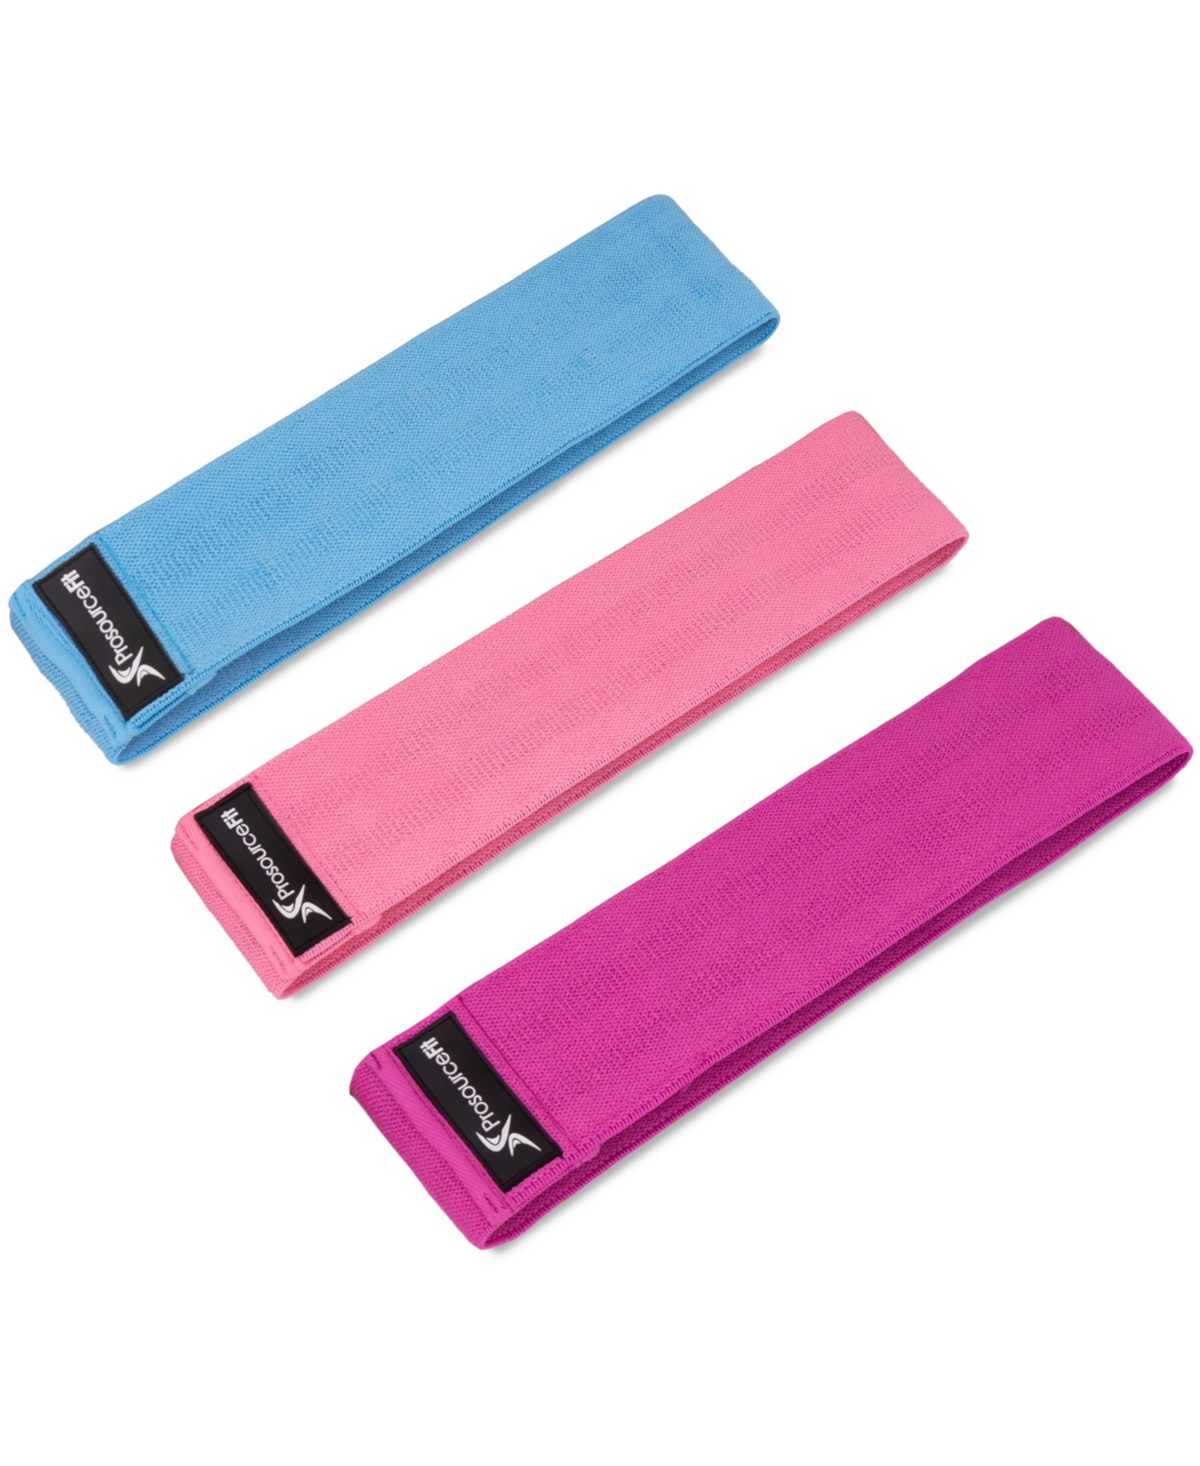 Fabric Loop Resistance Band Set of 3 - Blue/pink/purple